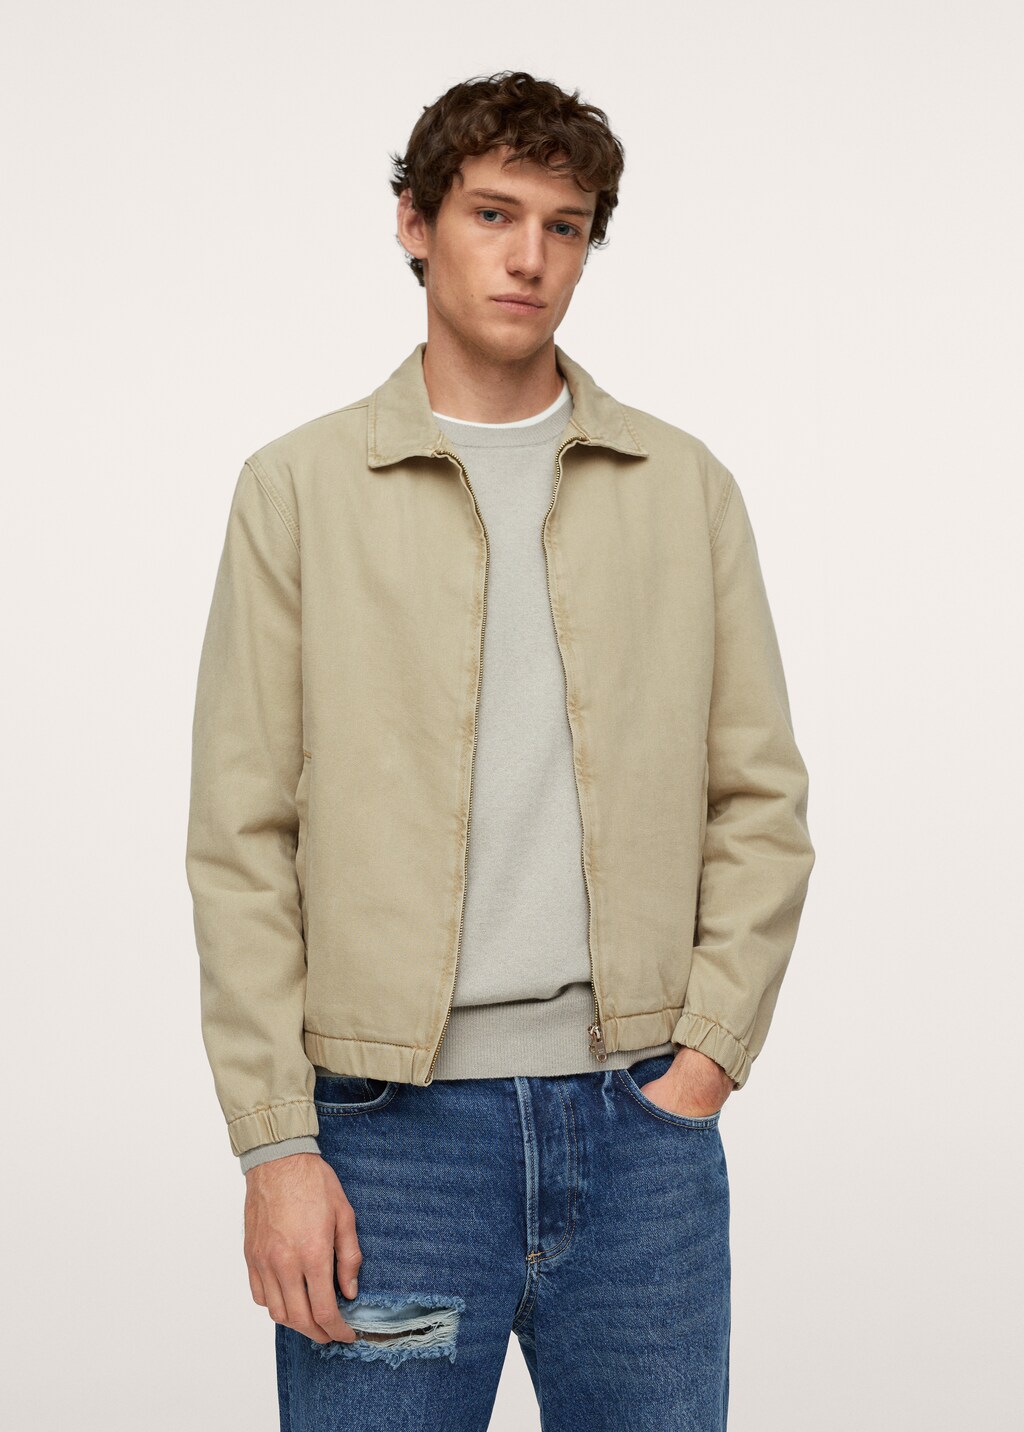 Denim jacket with zipper - Medium plane